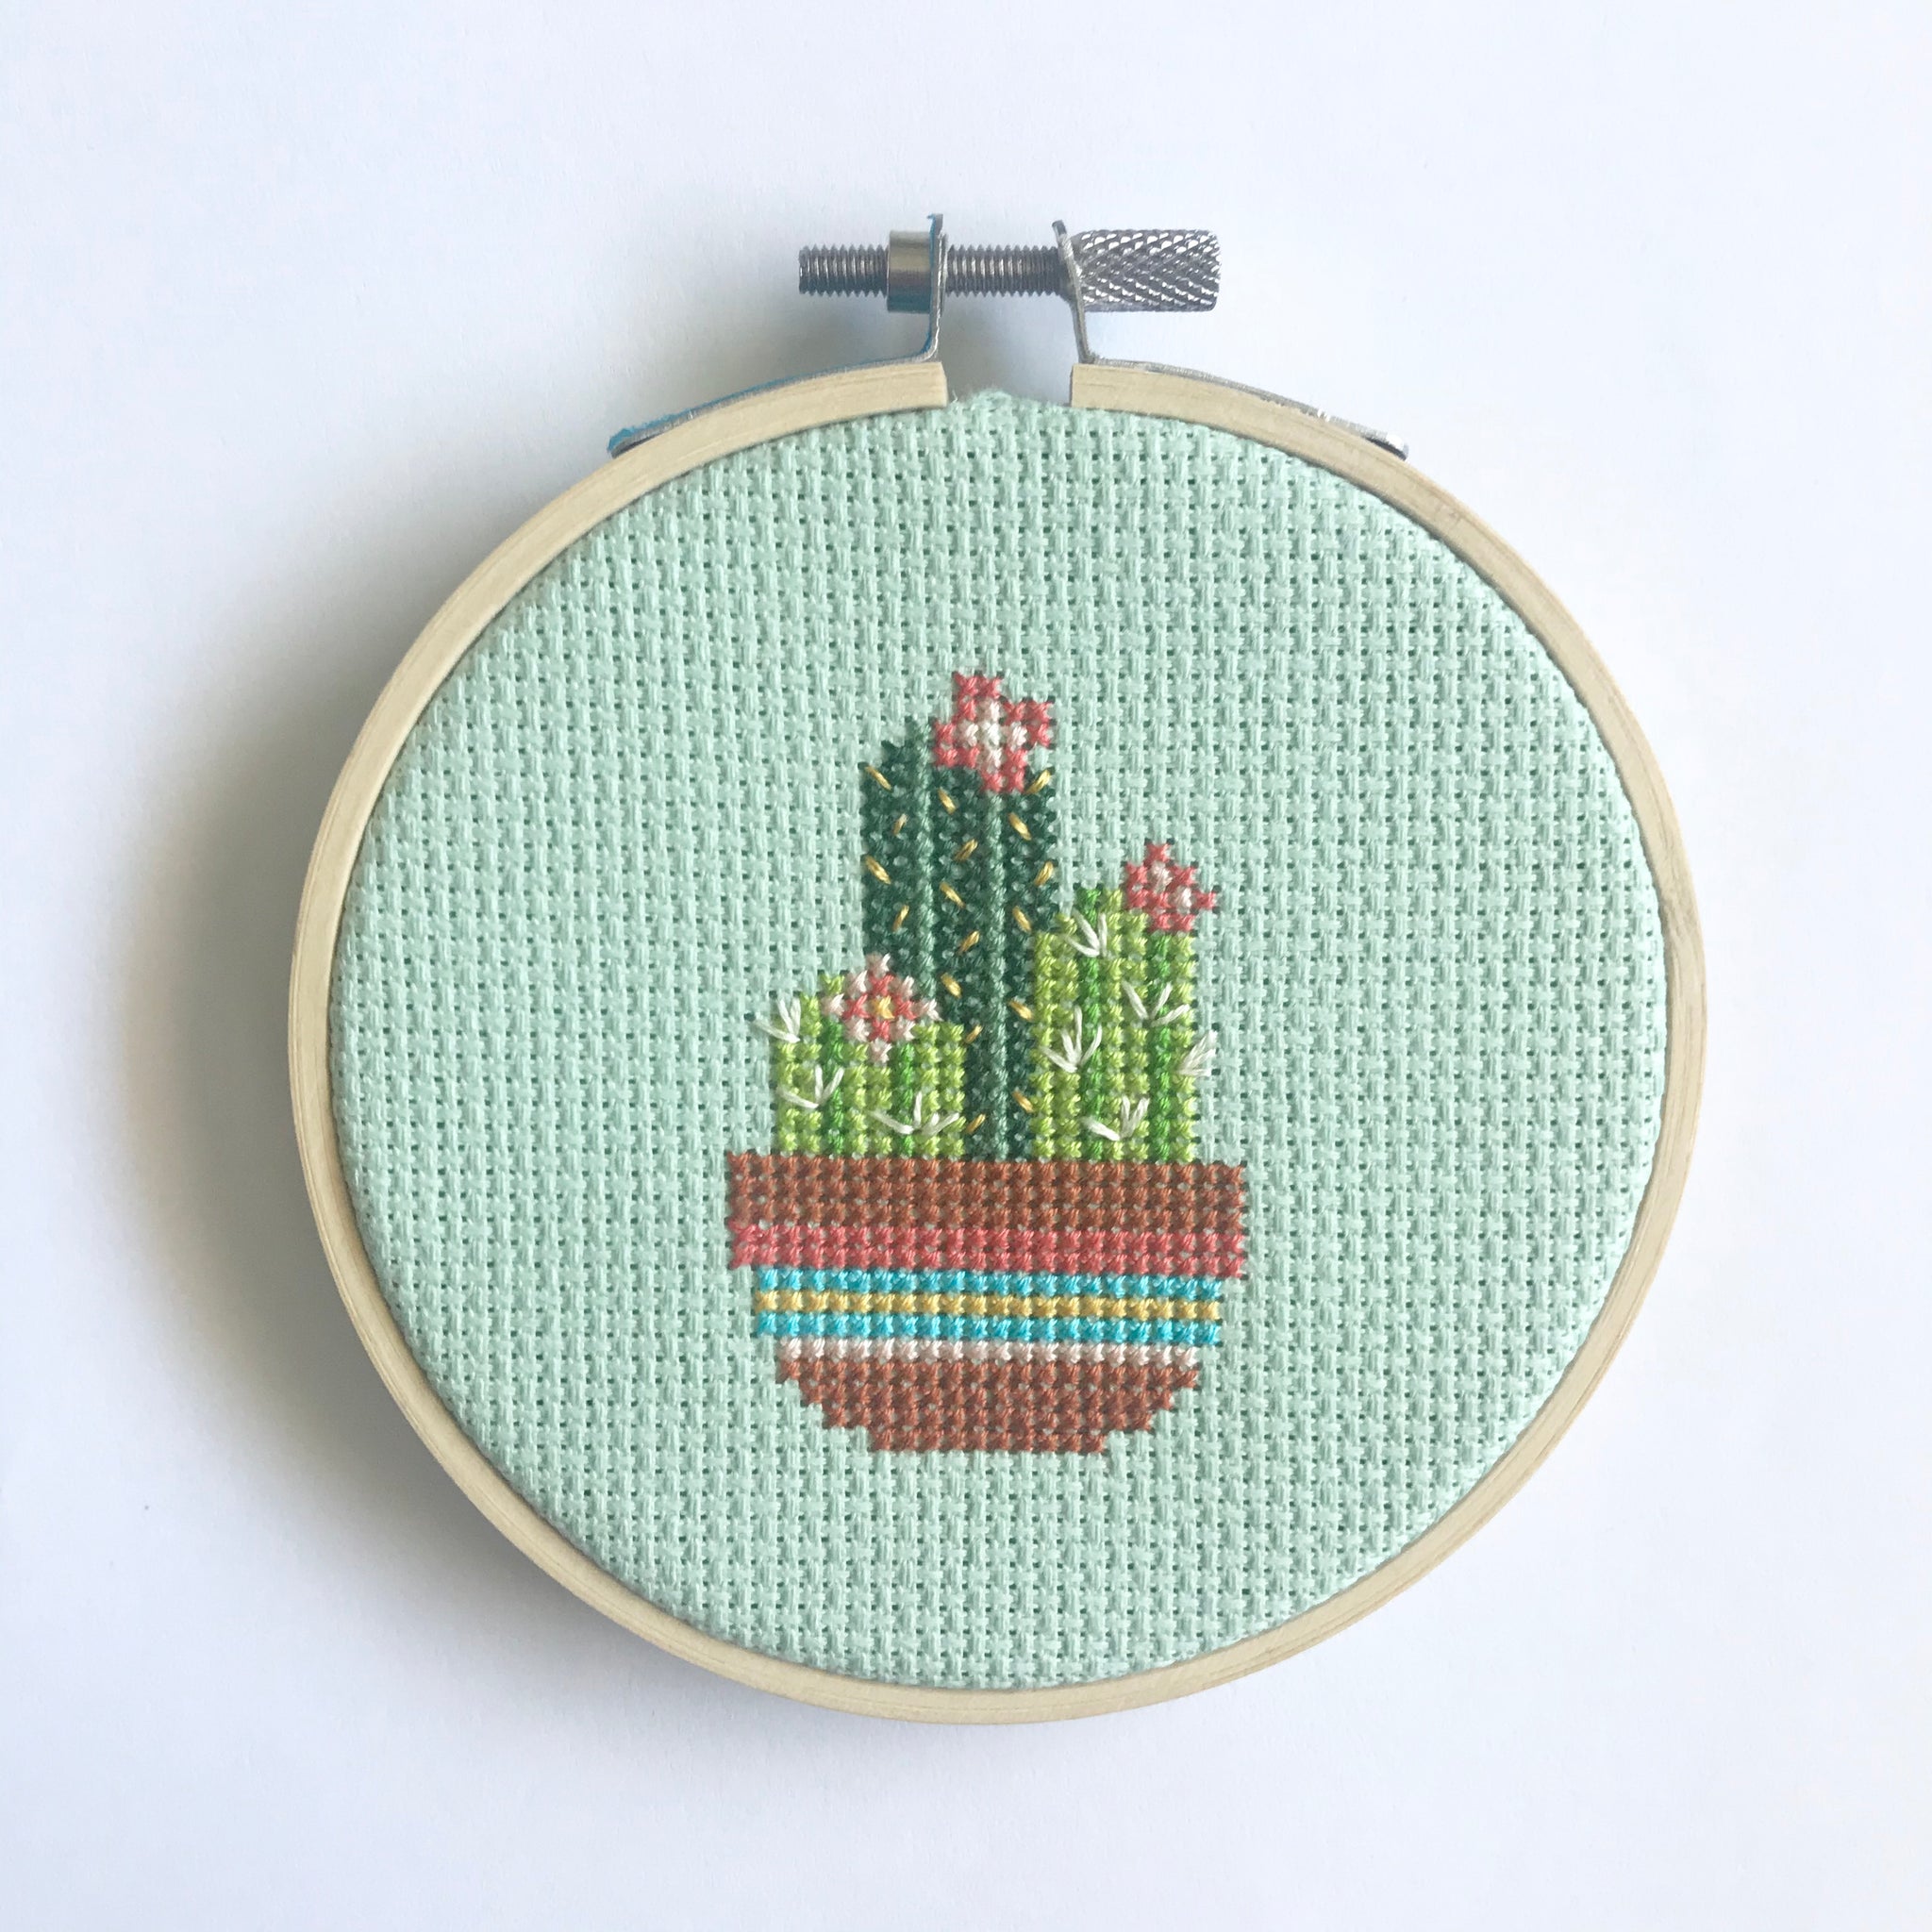 Mini Cross Stitch Embroidery Kit - Cactus